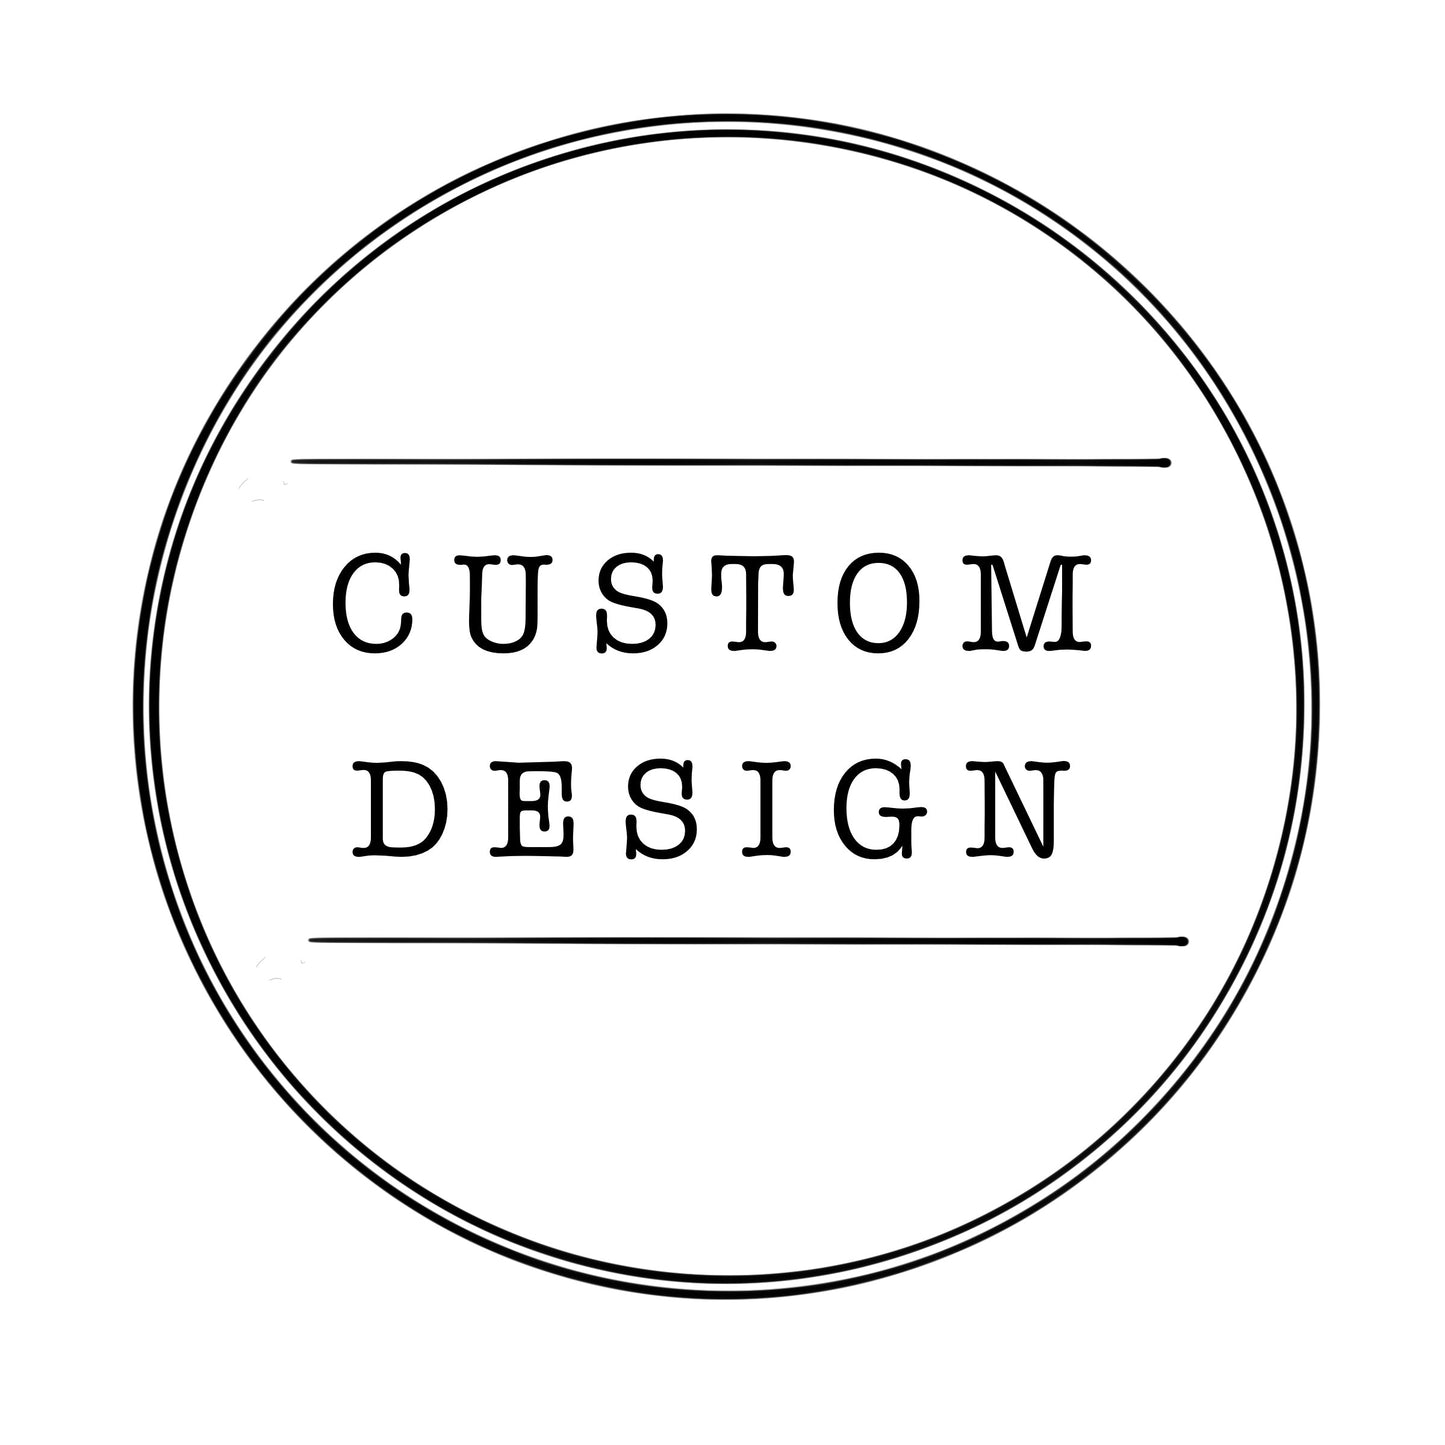 Custom Design for Caitlyn